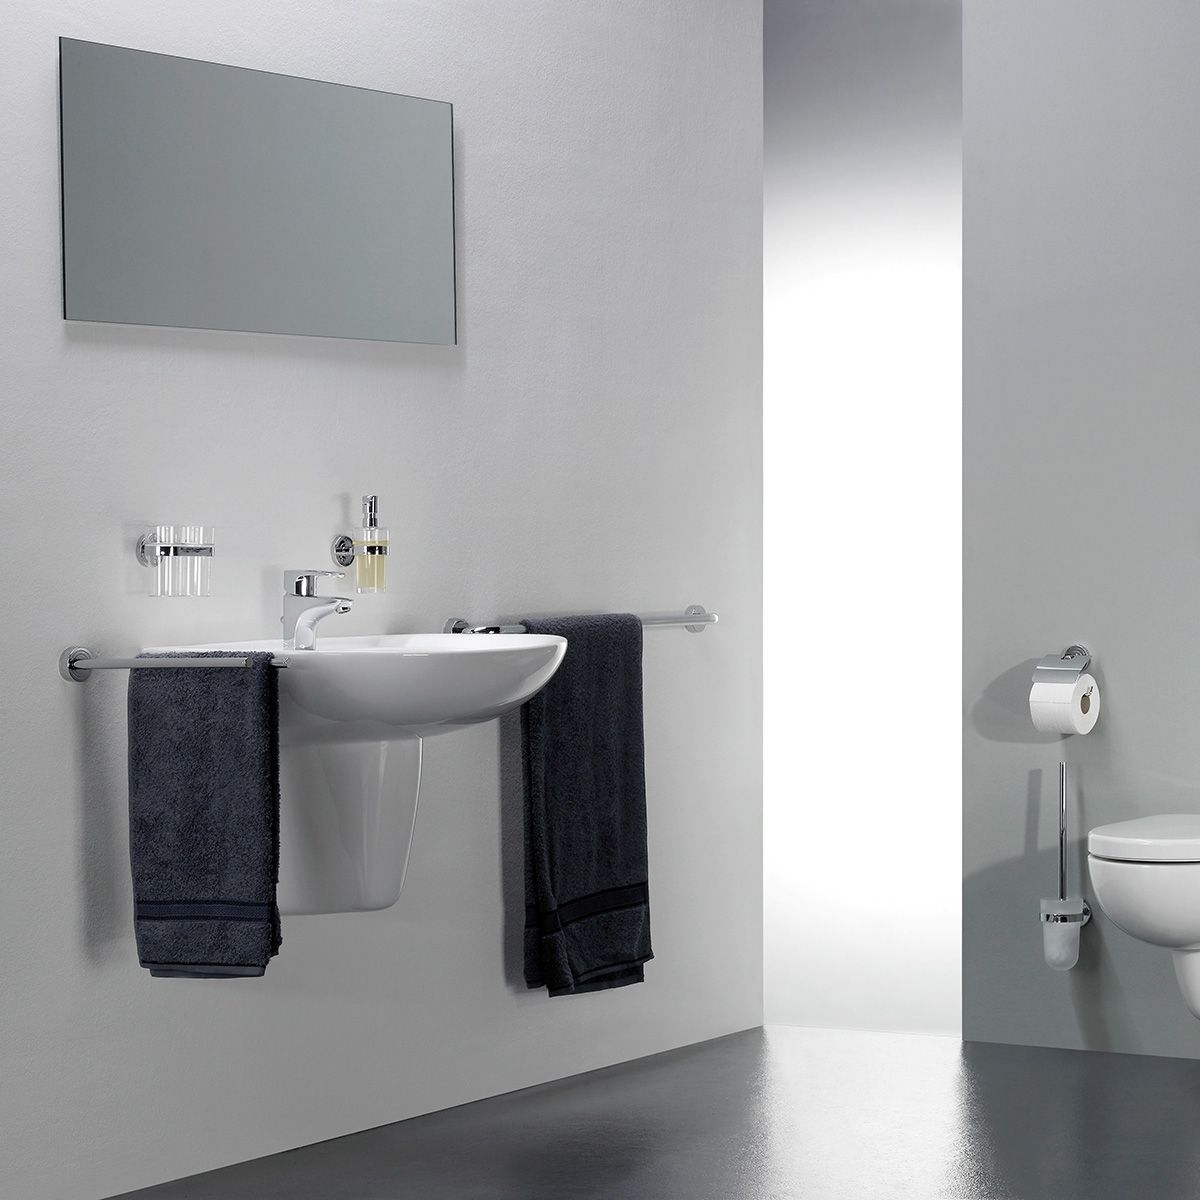 How to Determine the Correct Bathroom Mirror Size